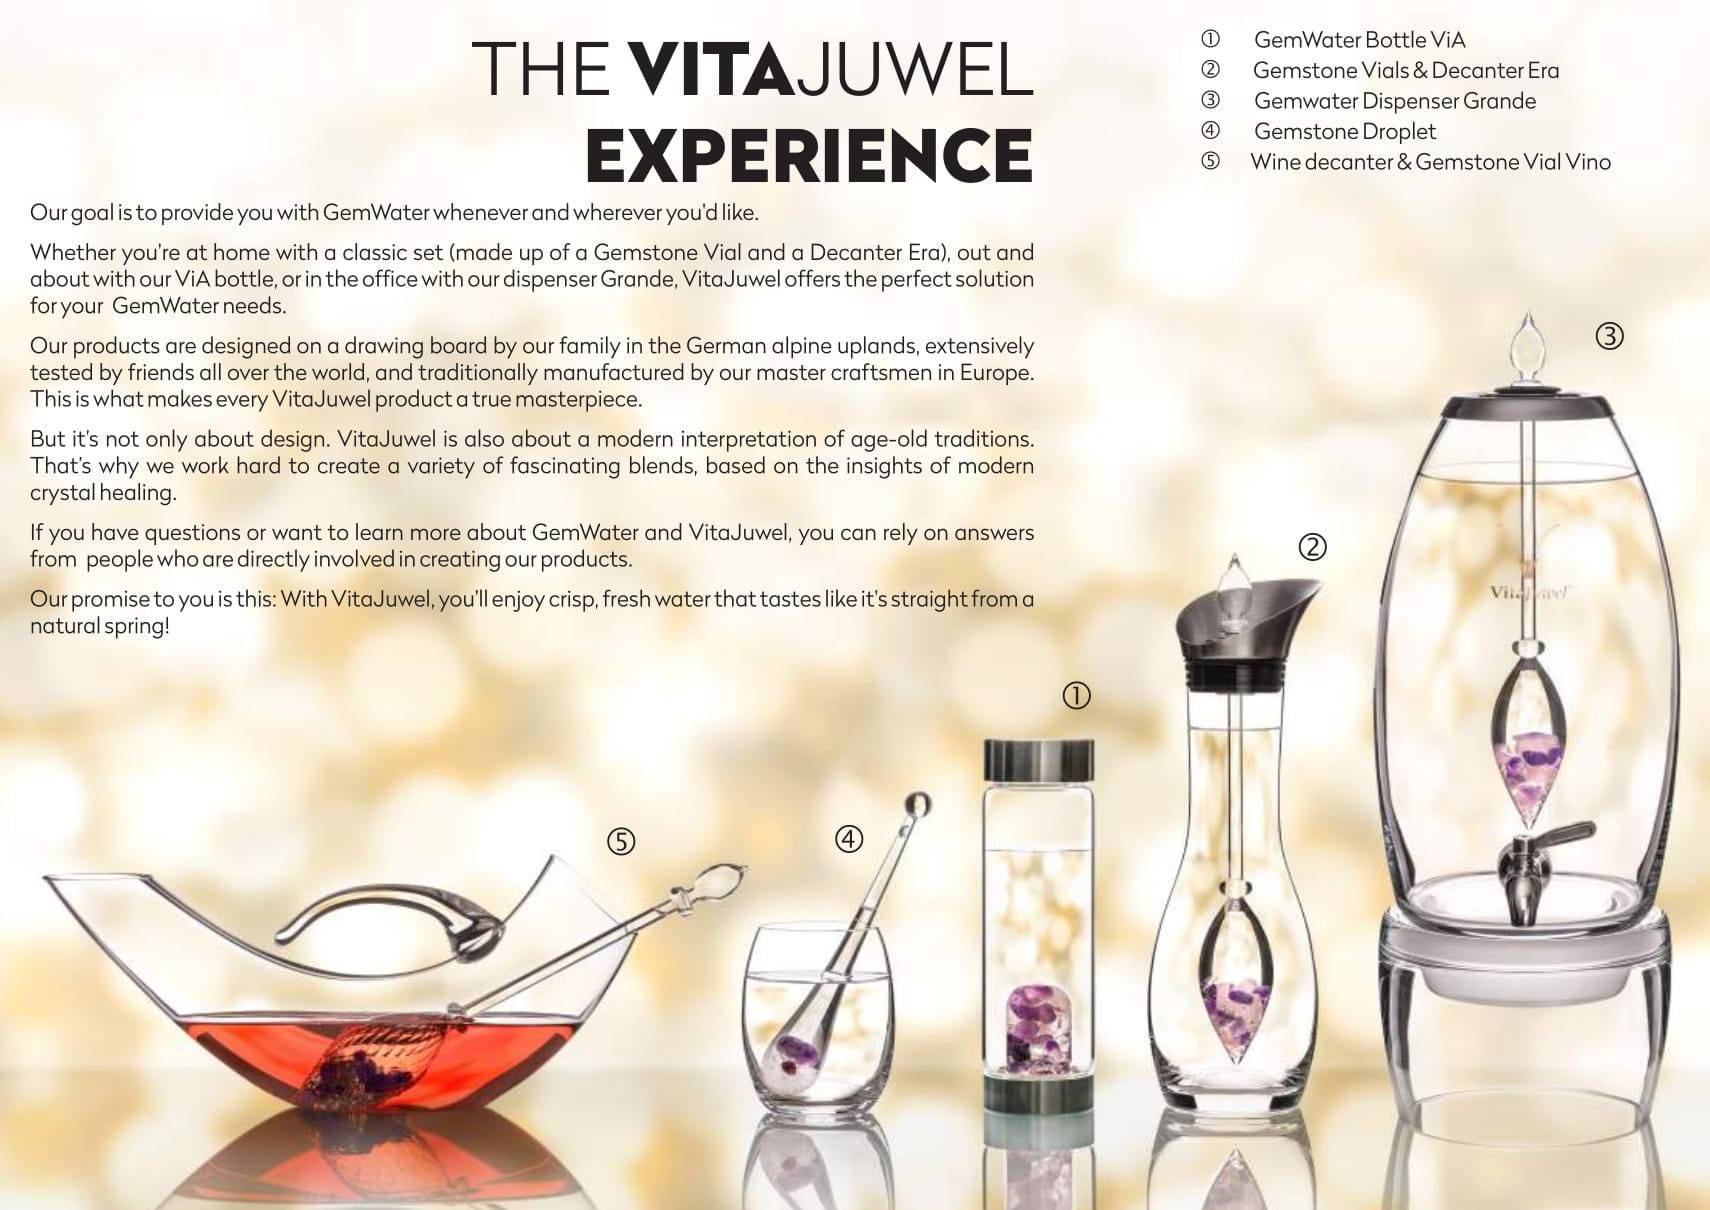 Vitajuwel ViA Gemwater Bottle VITALITY Blend with LOOP Handle Emerald Quartz Renewal - claritycove.com